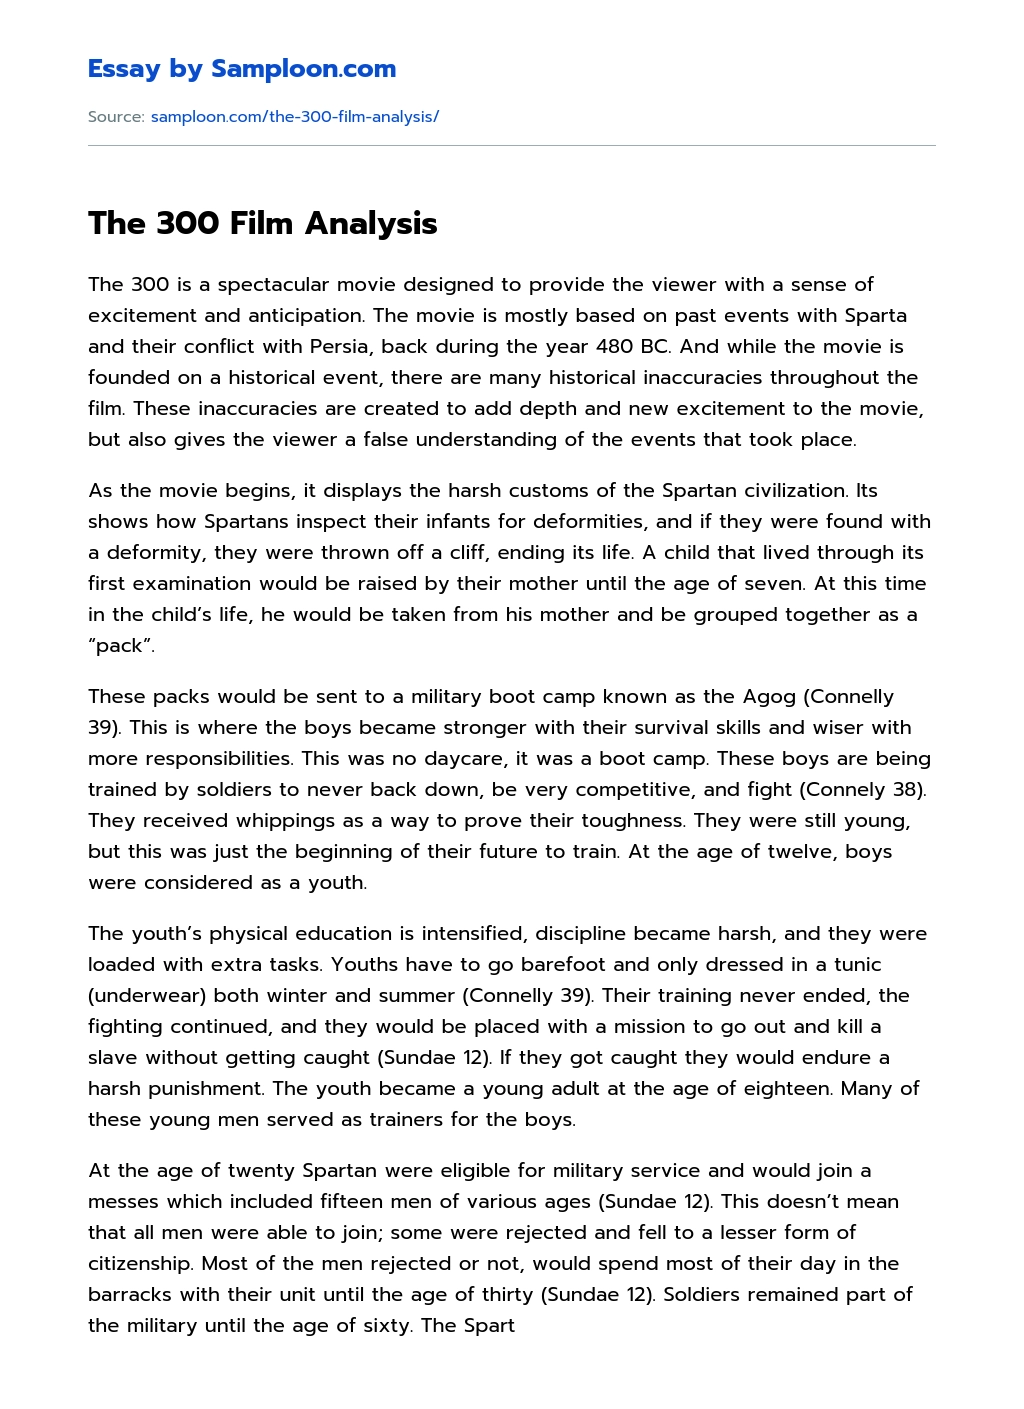 The 300 Film Analysis essay